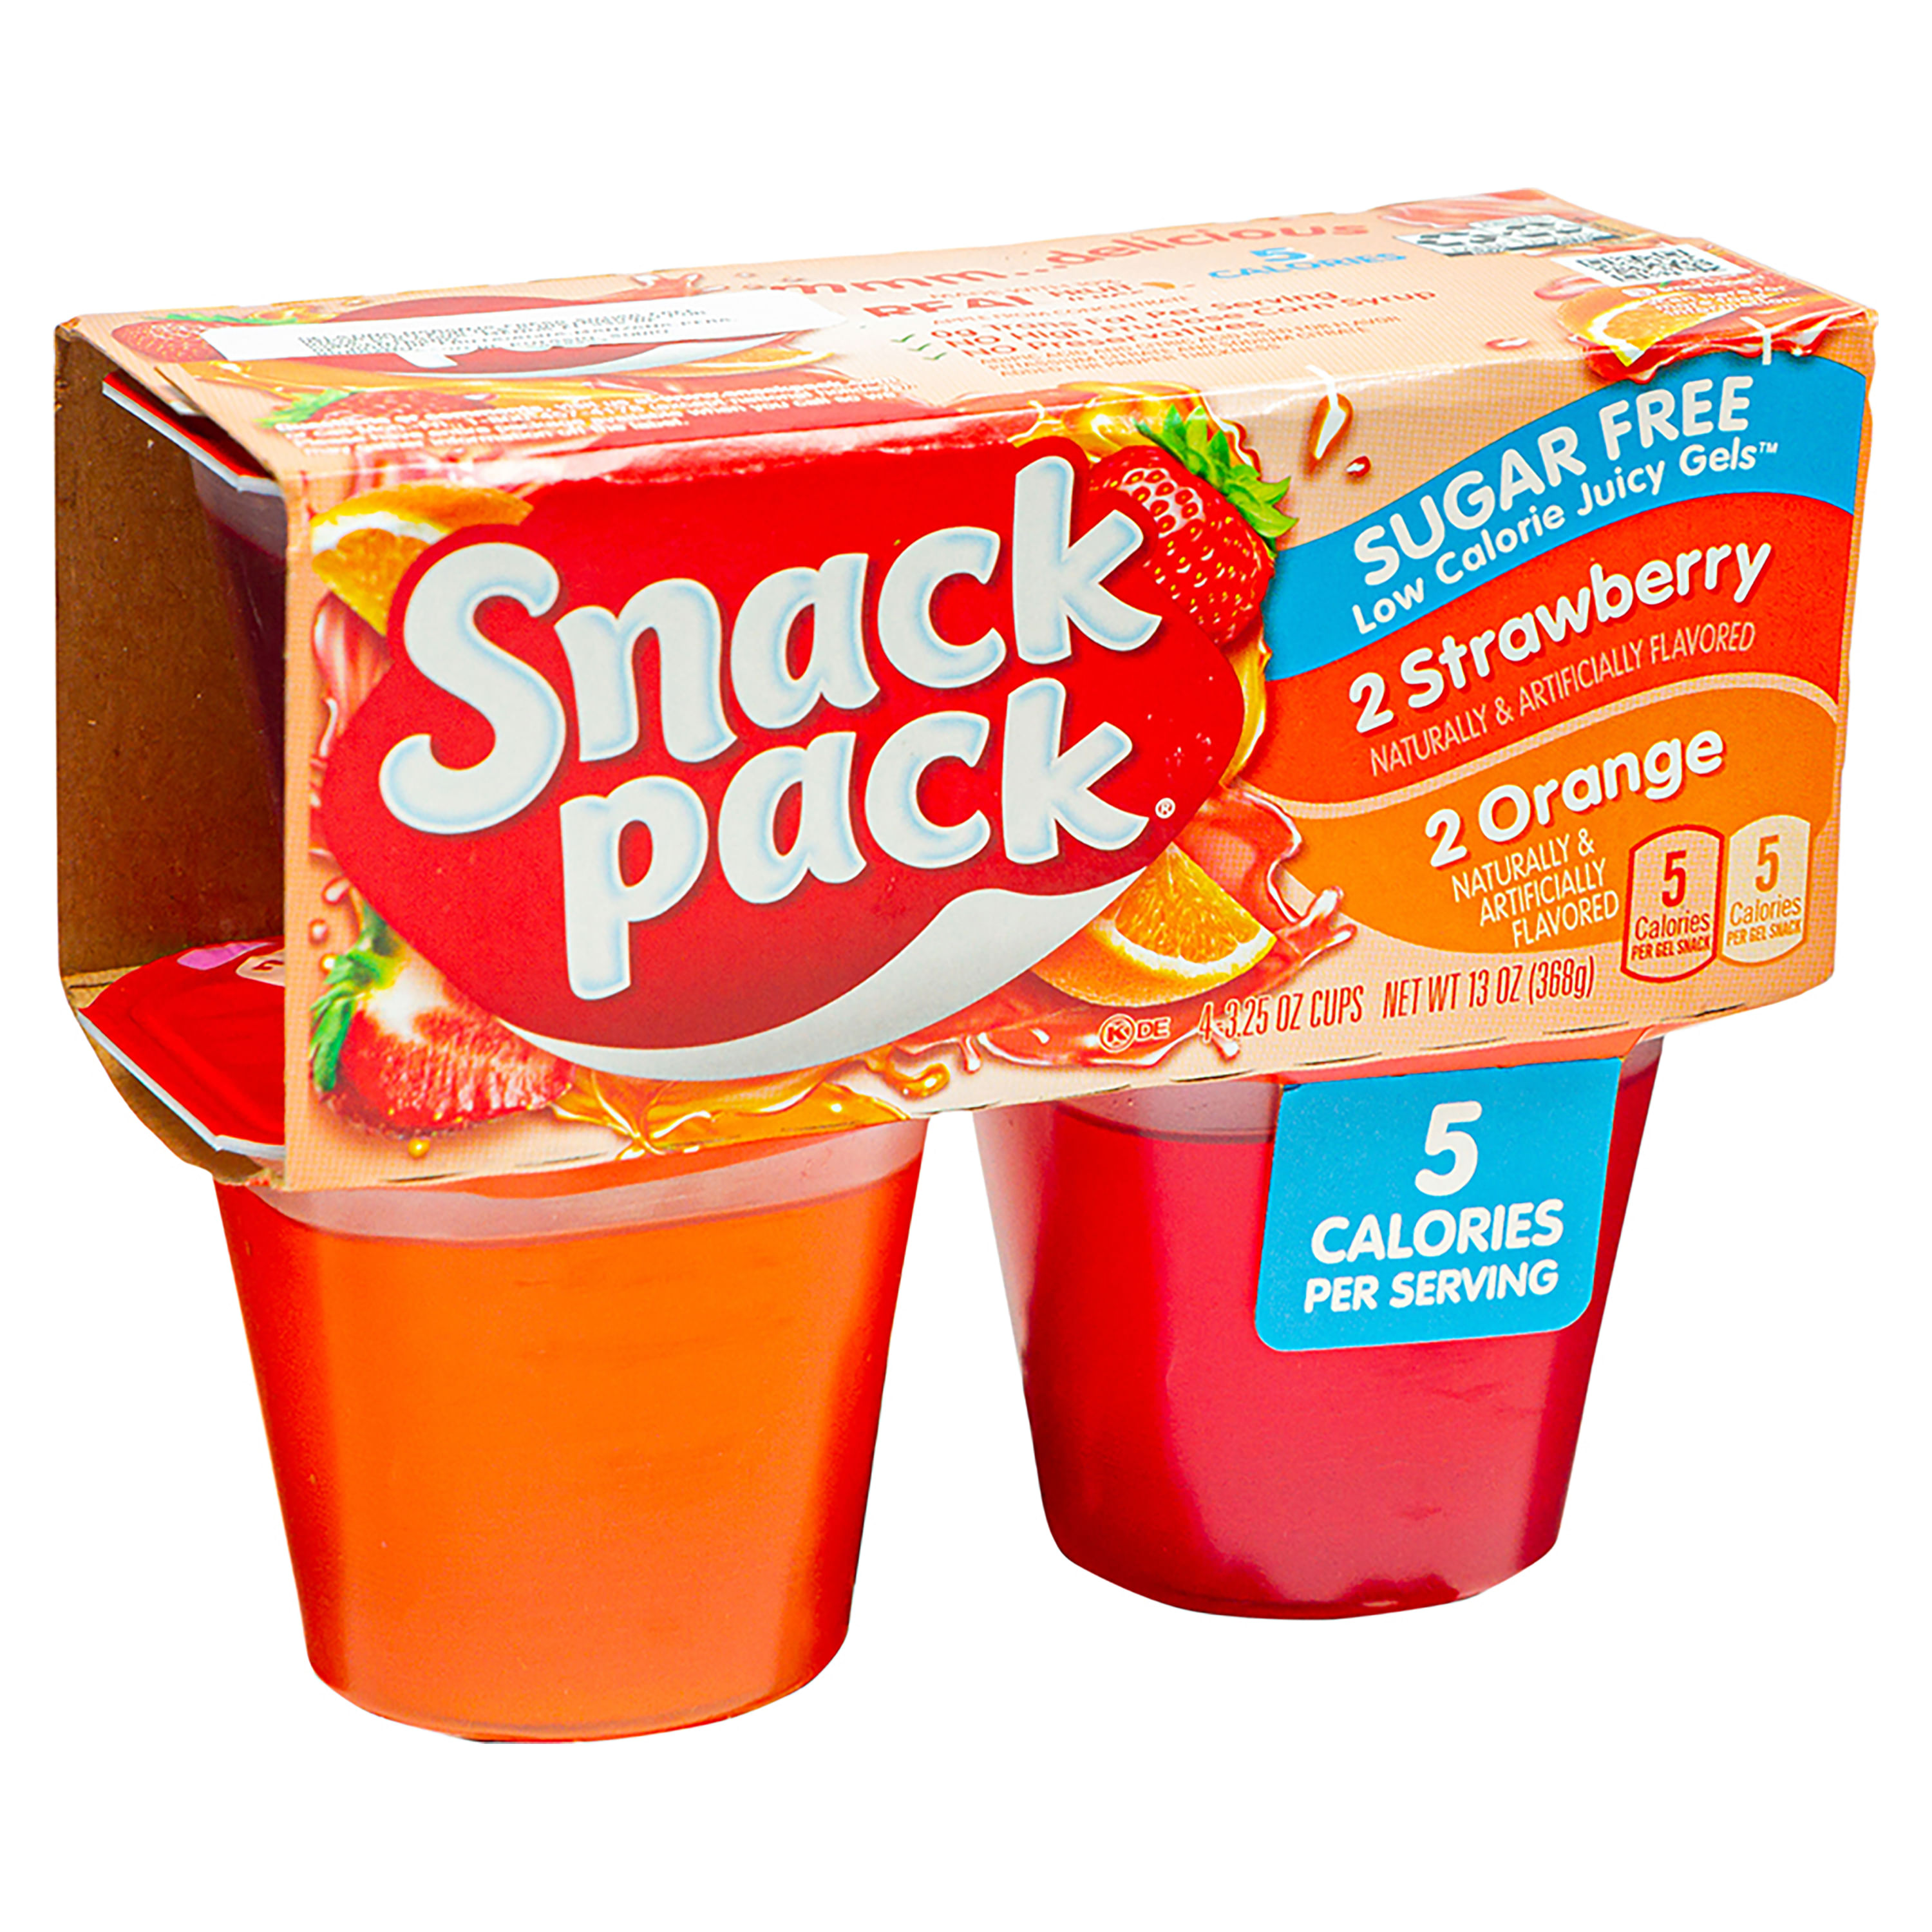 Snack Pack Gelatina sin azúcar 4 pack (Variedad de sabores